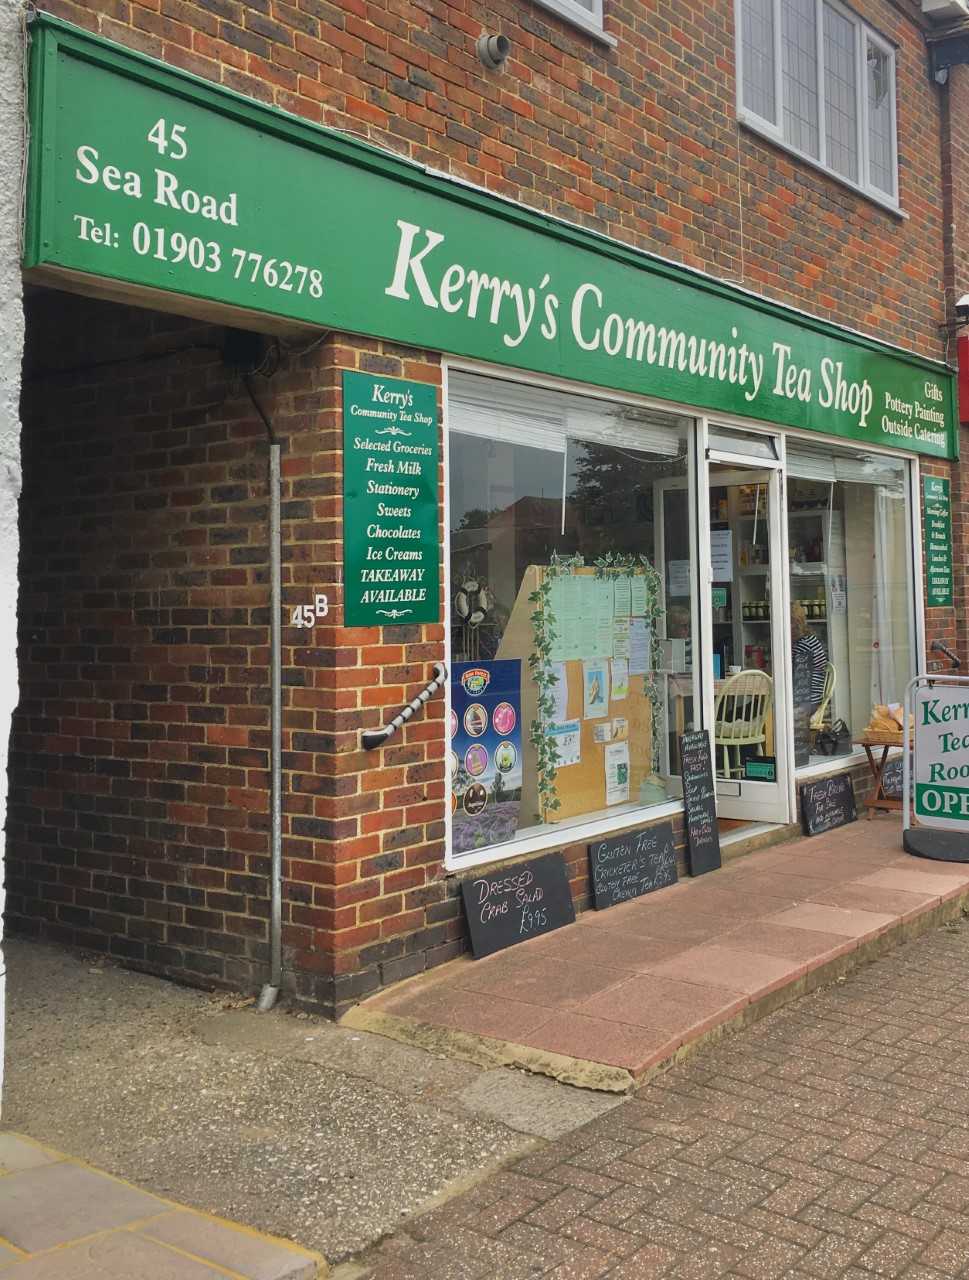 Kerry's Community Tea Shop in East Preston